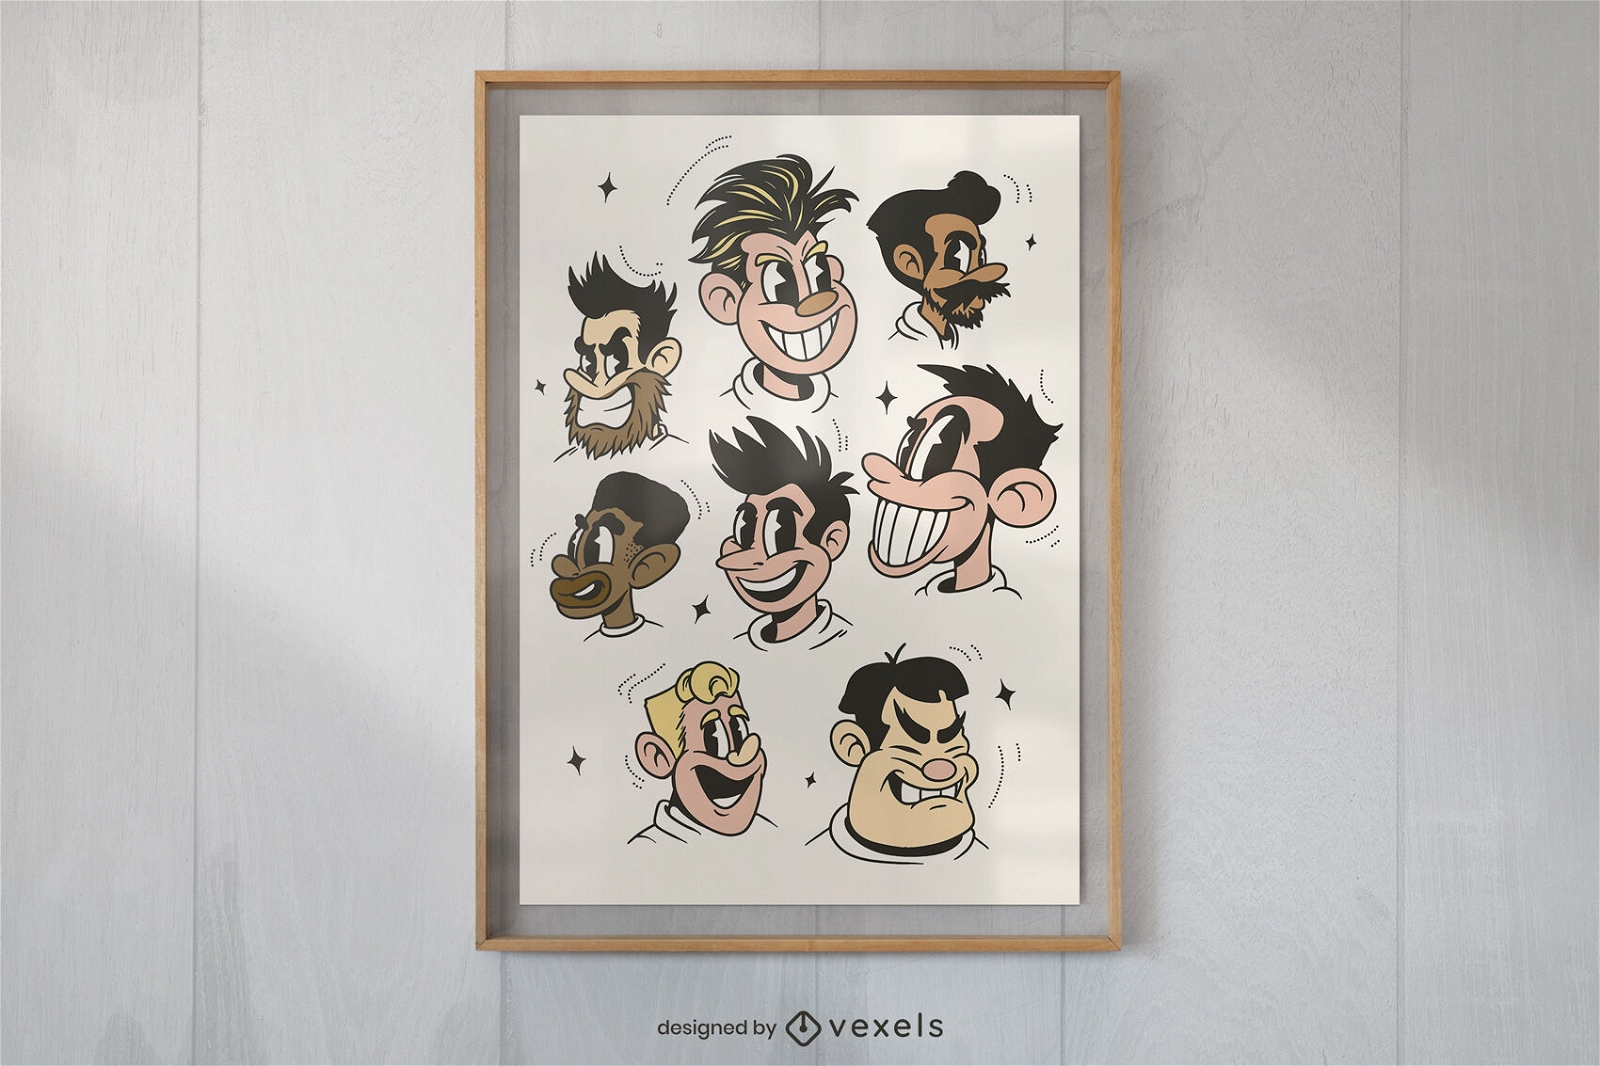 Retro cartoon hairstyles poster design